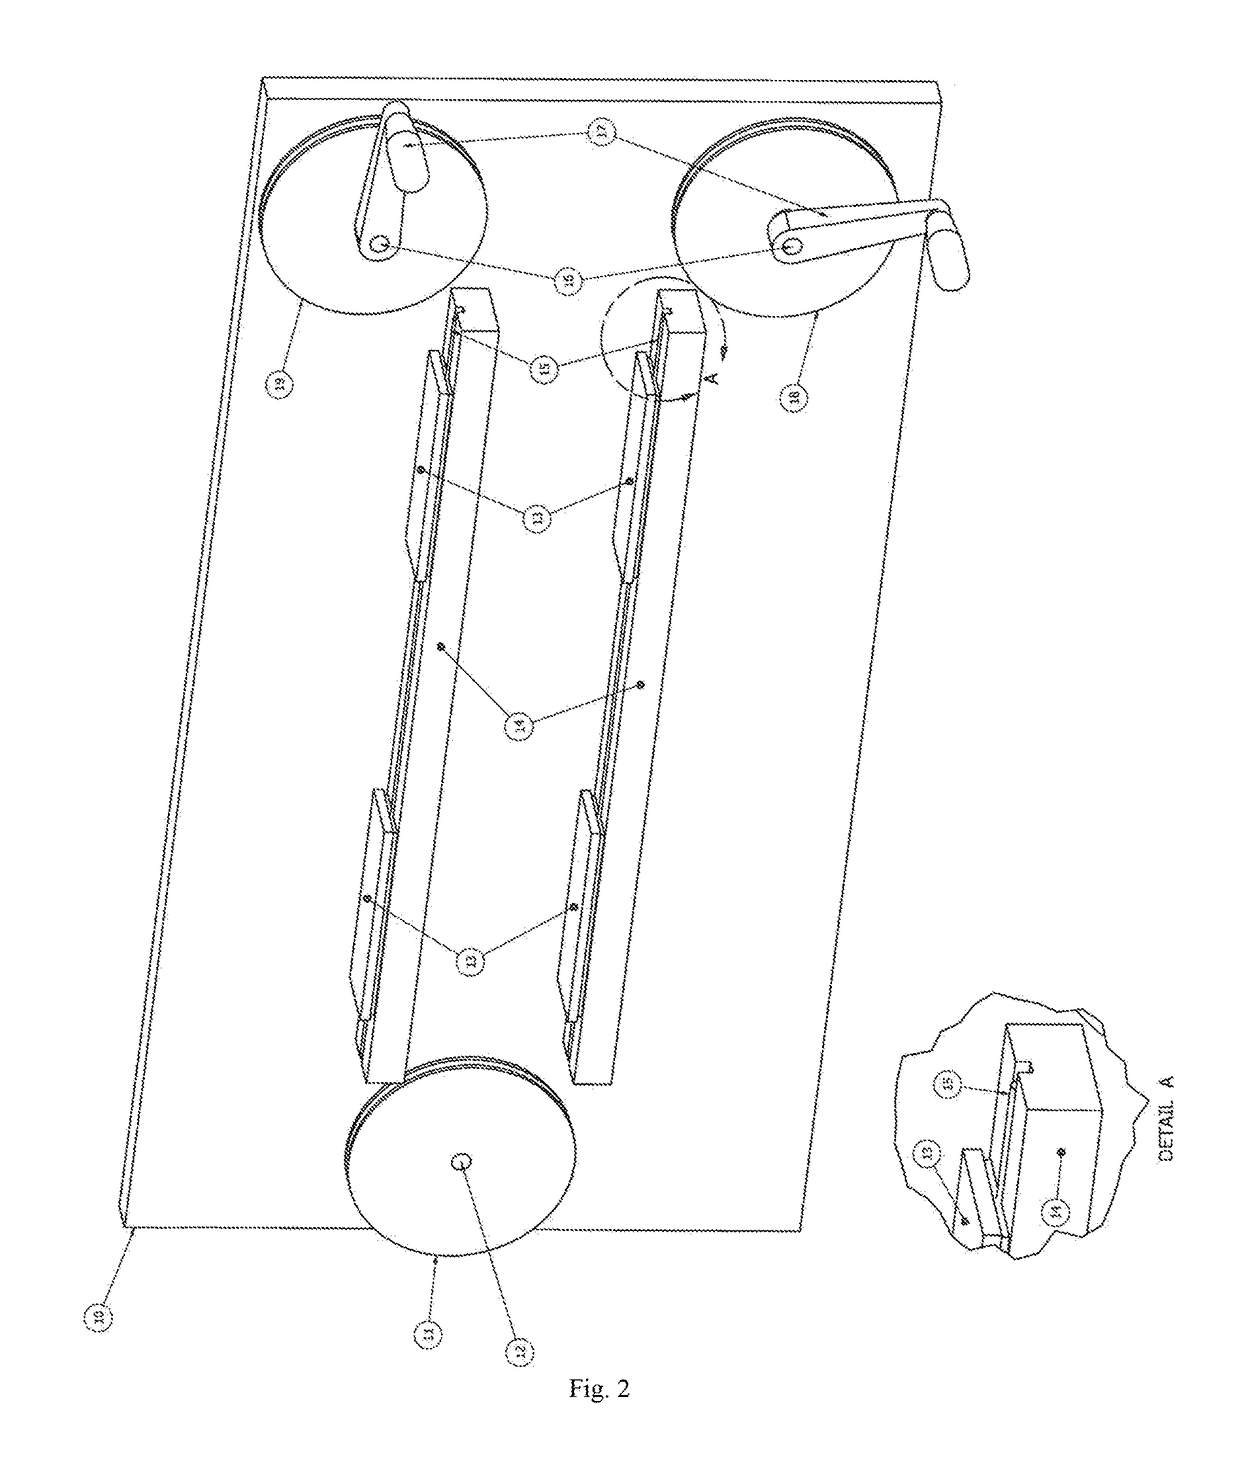 Shrink tube insulation apparatus